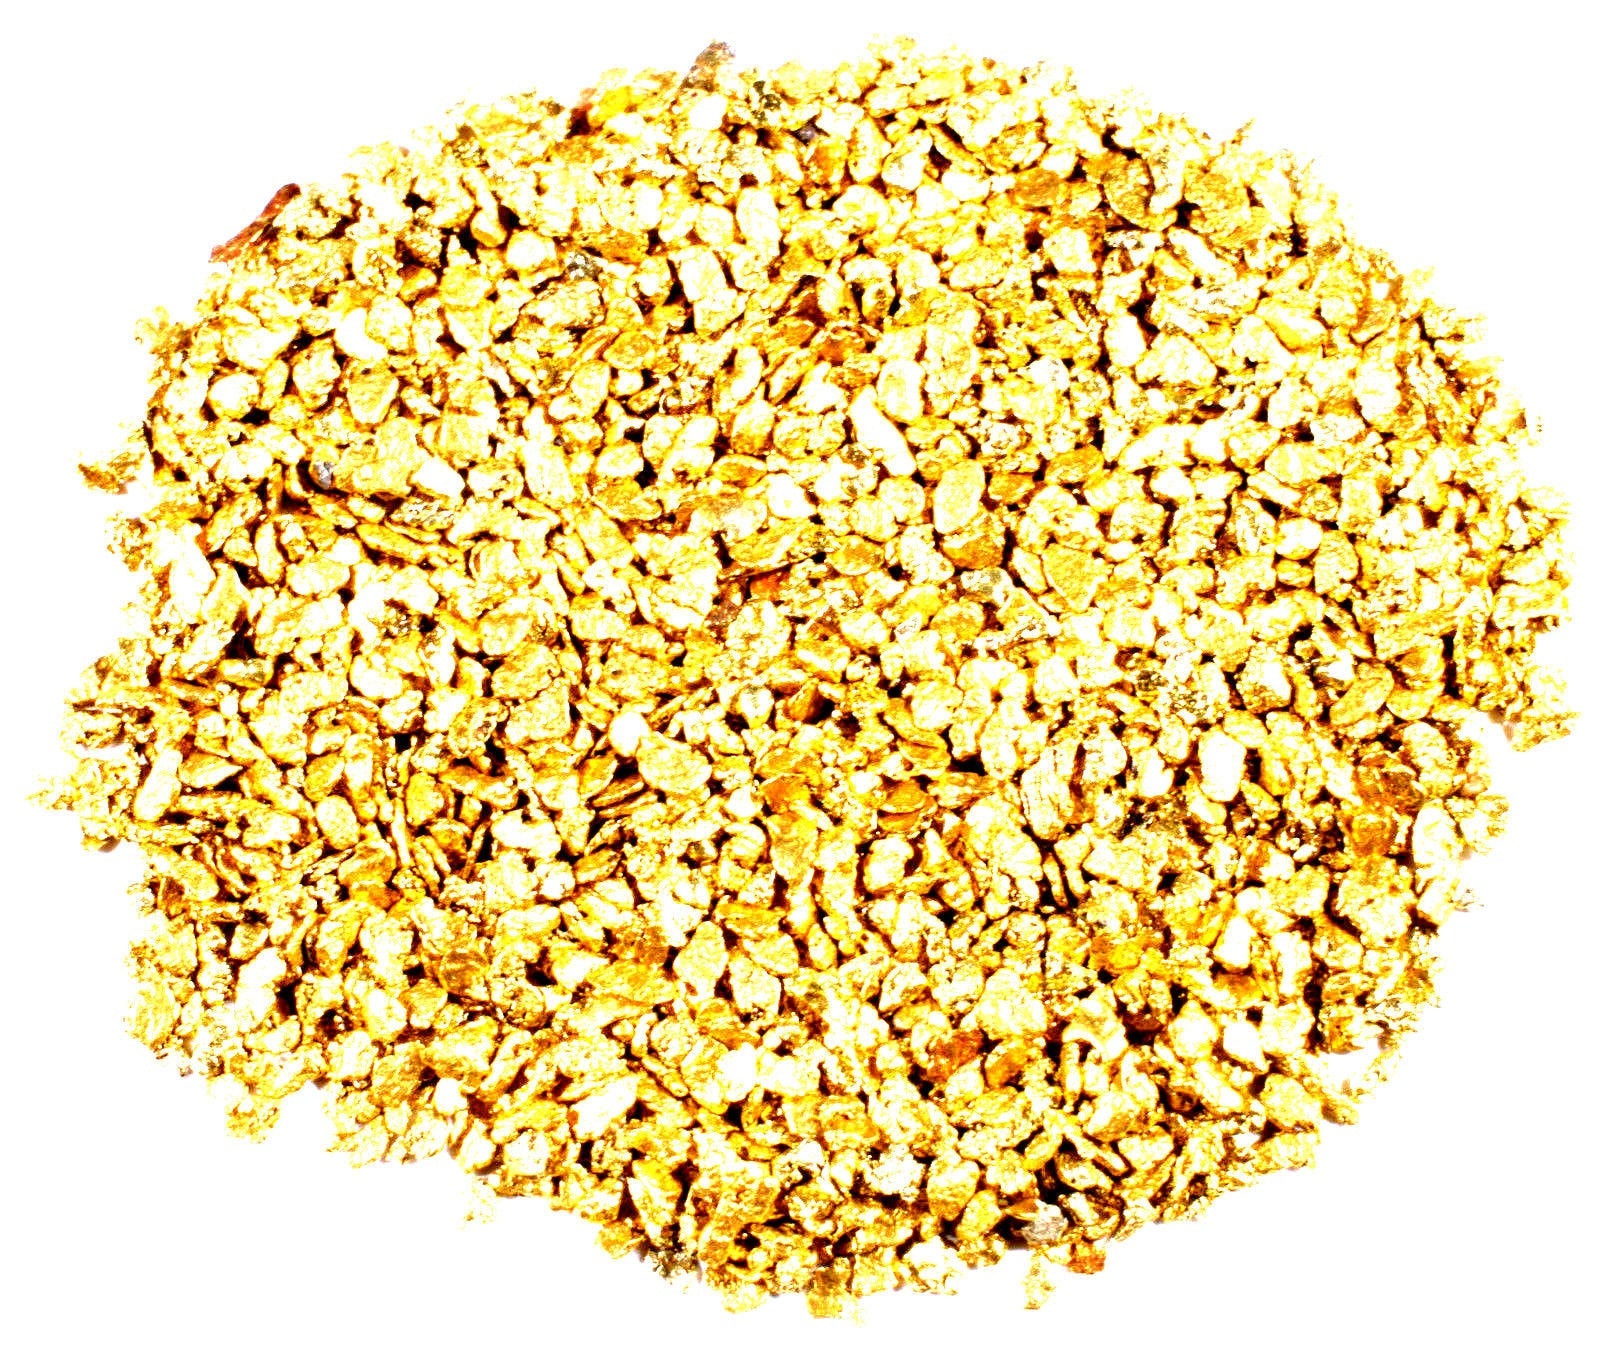 10 PIECE LOT ALASKAN YUKON BC NATURAL PURE GOLD NUGGETS (#B250) - Liquidbullion